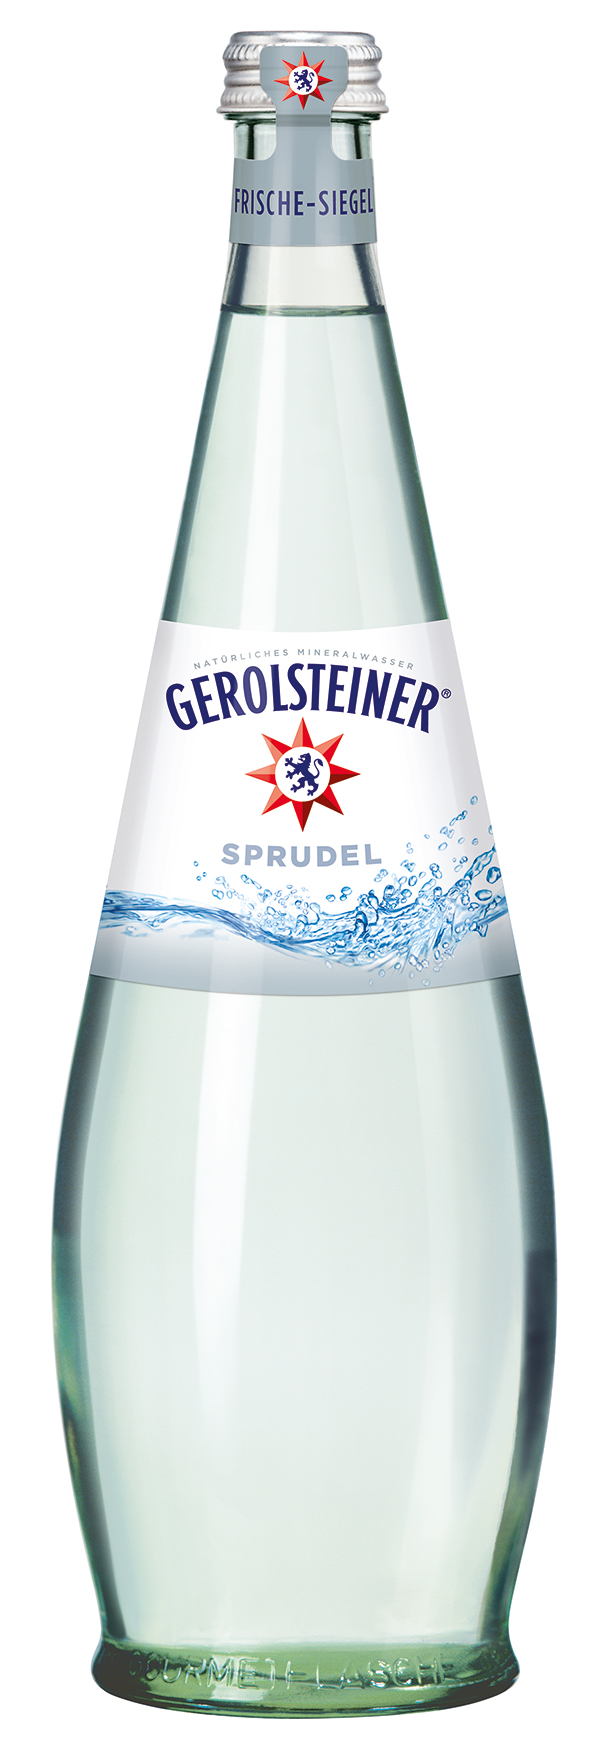 Gerolsteiner Sprudel Gourmet 12 x 0,75 l (Glas)